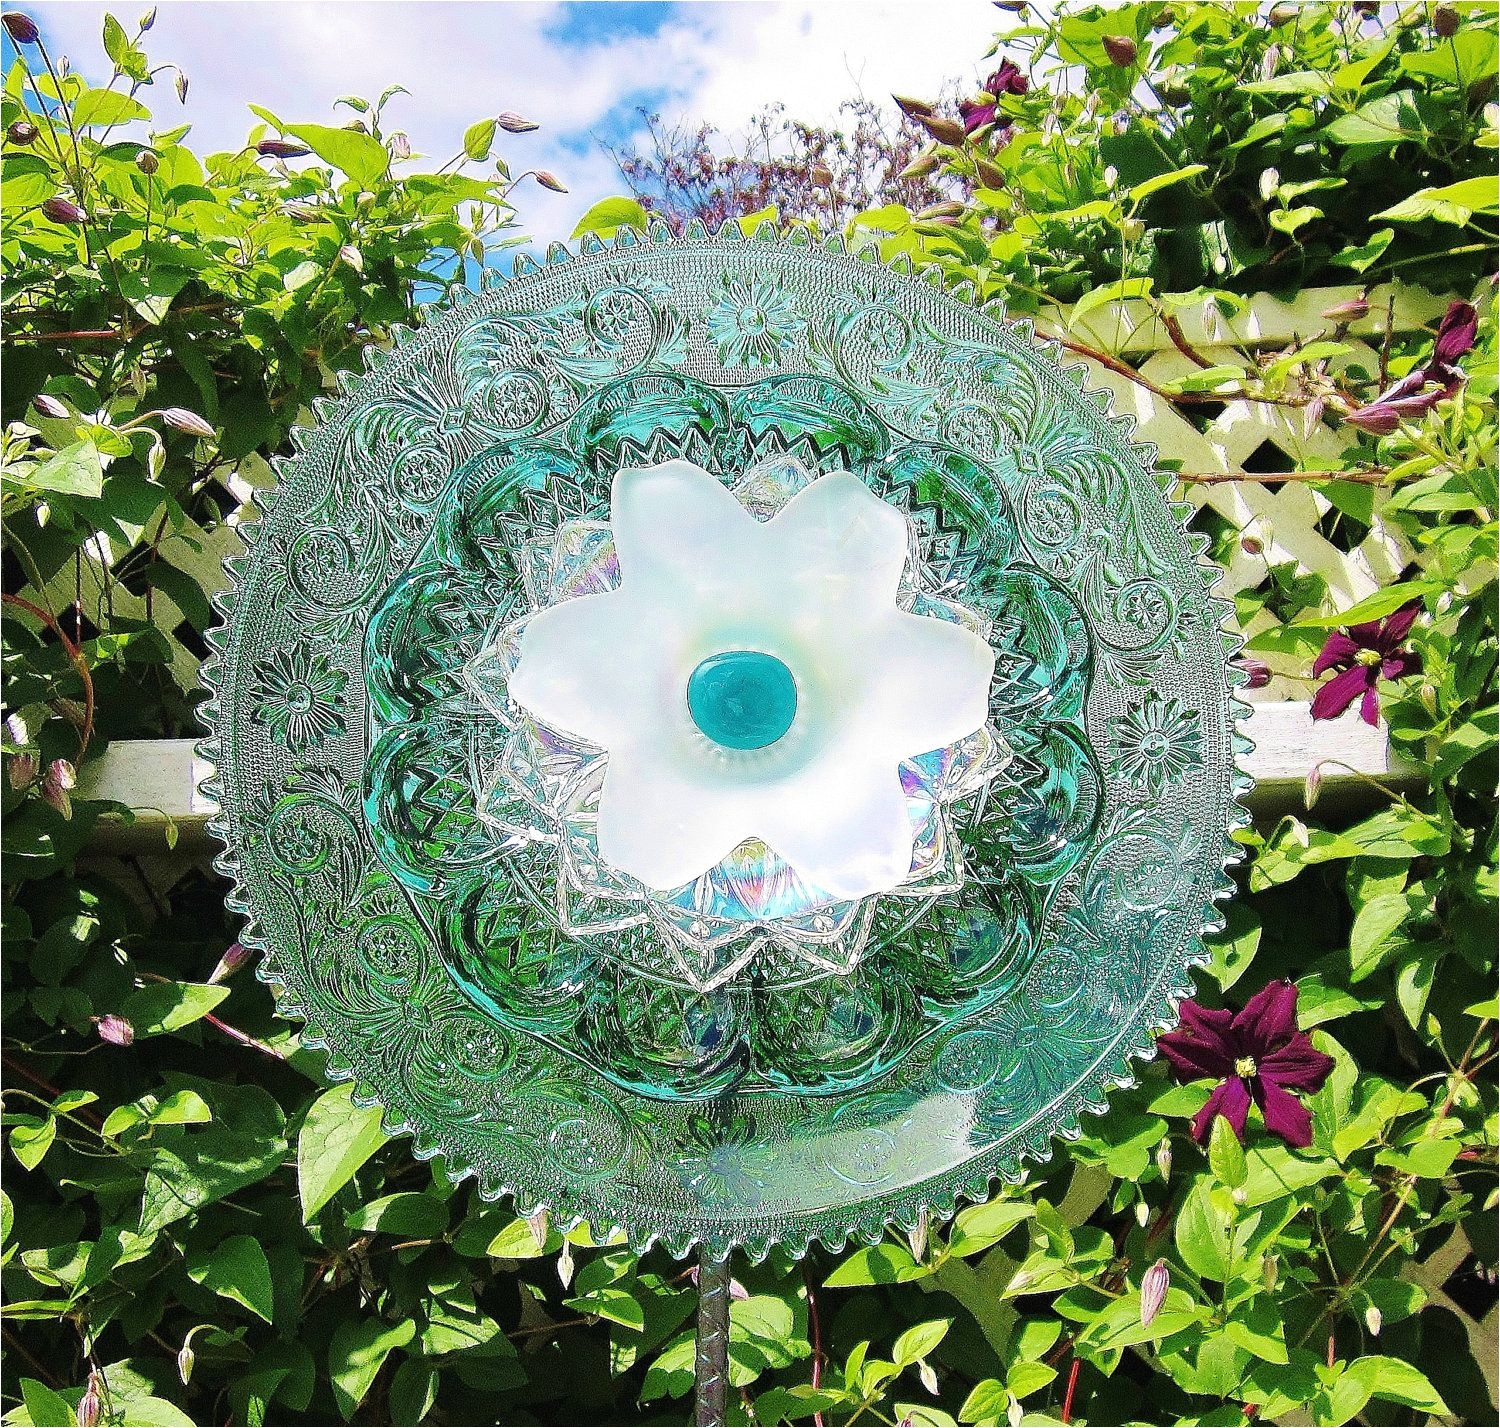 glass yard art teal garden art plate glass flower yard suncatcher upcycled repurposed